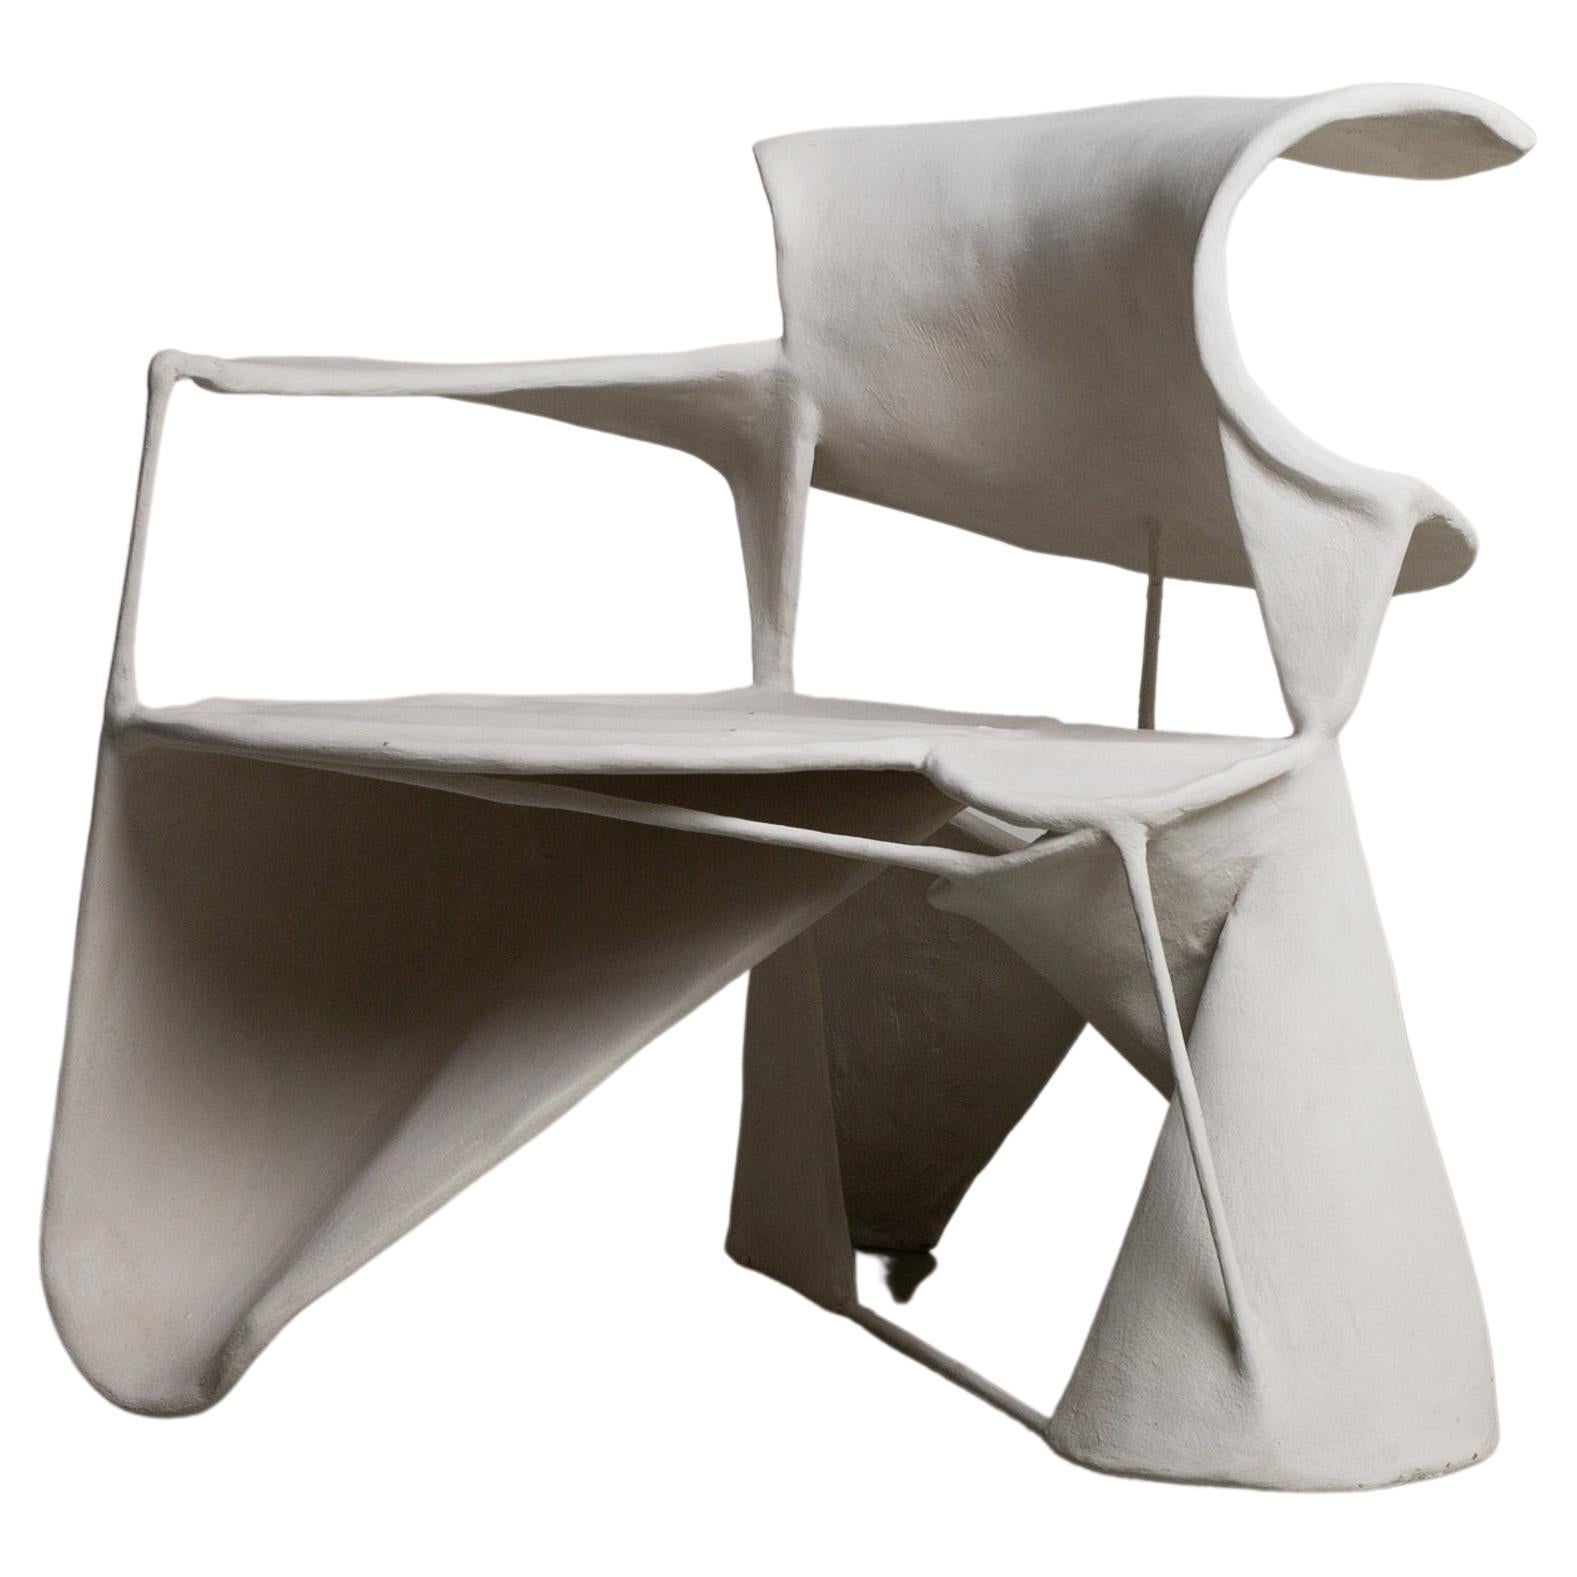 Contemporary Design White Textured Curved Sculptures Chair by Jordan van der Ven For Sale